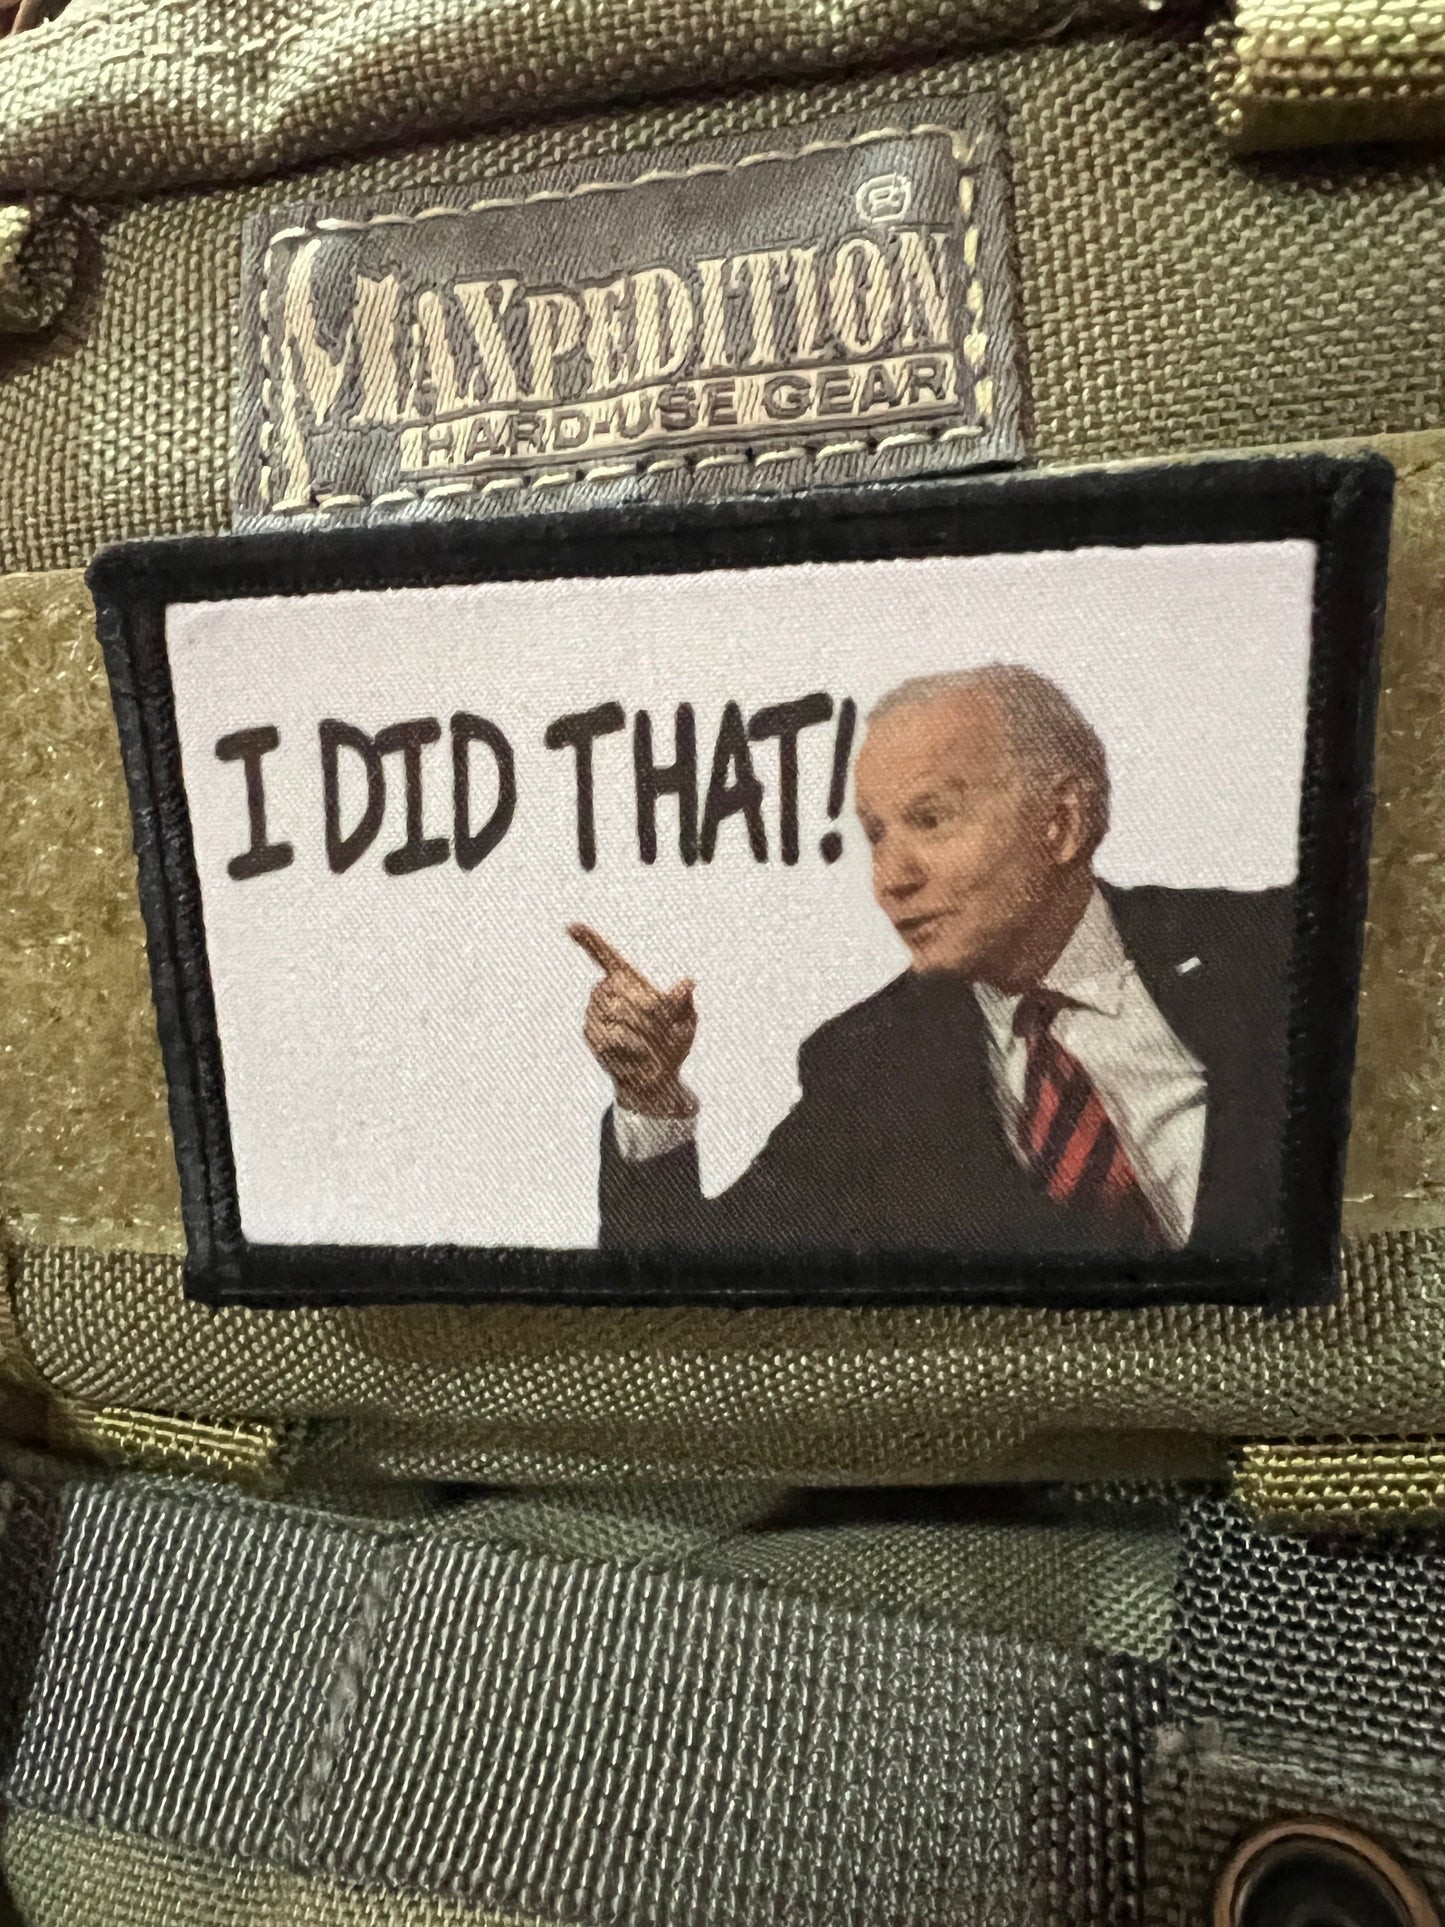 Joe Biden "I Did That!" 2